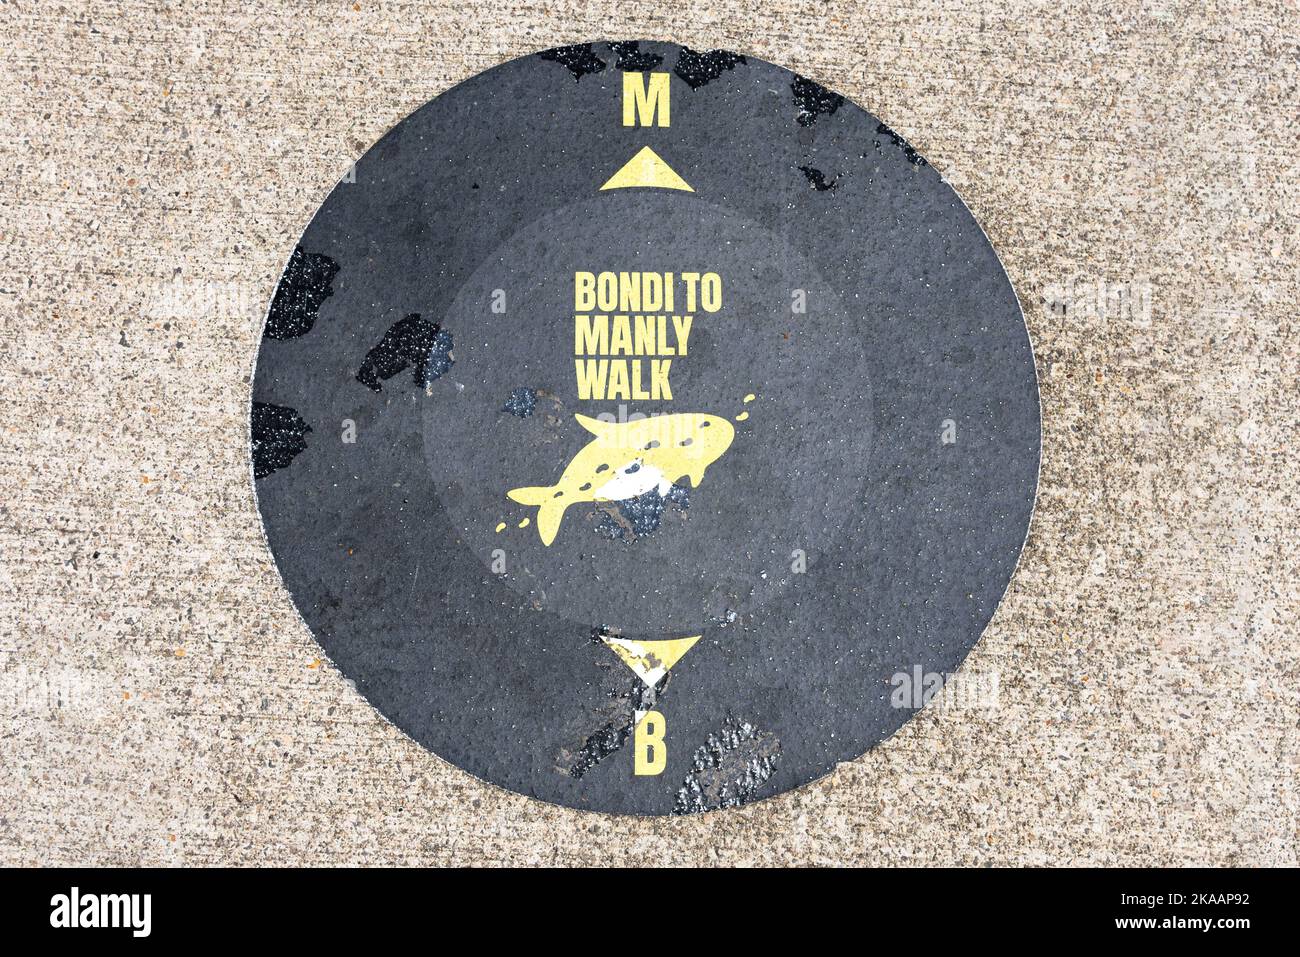 A Bondi to Manly Walk sign in Sydney, Australia Stock Photo